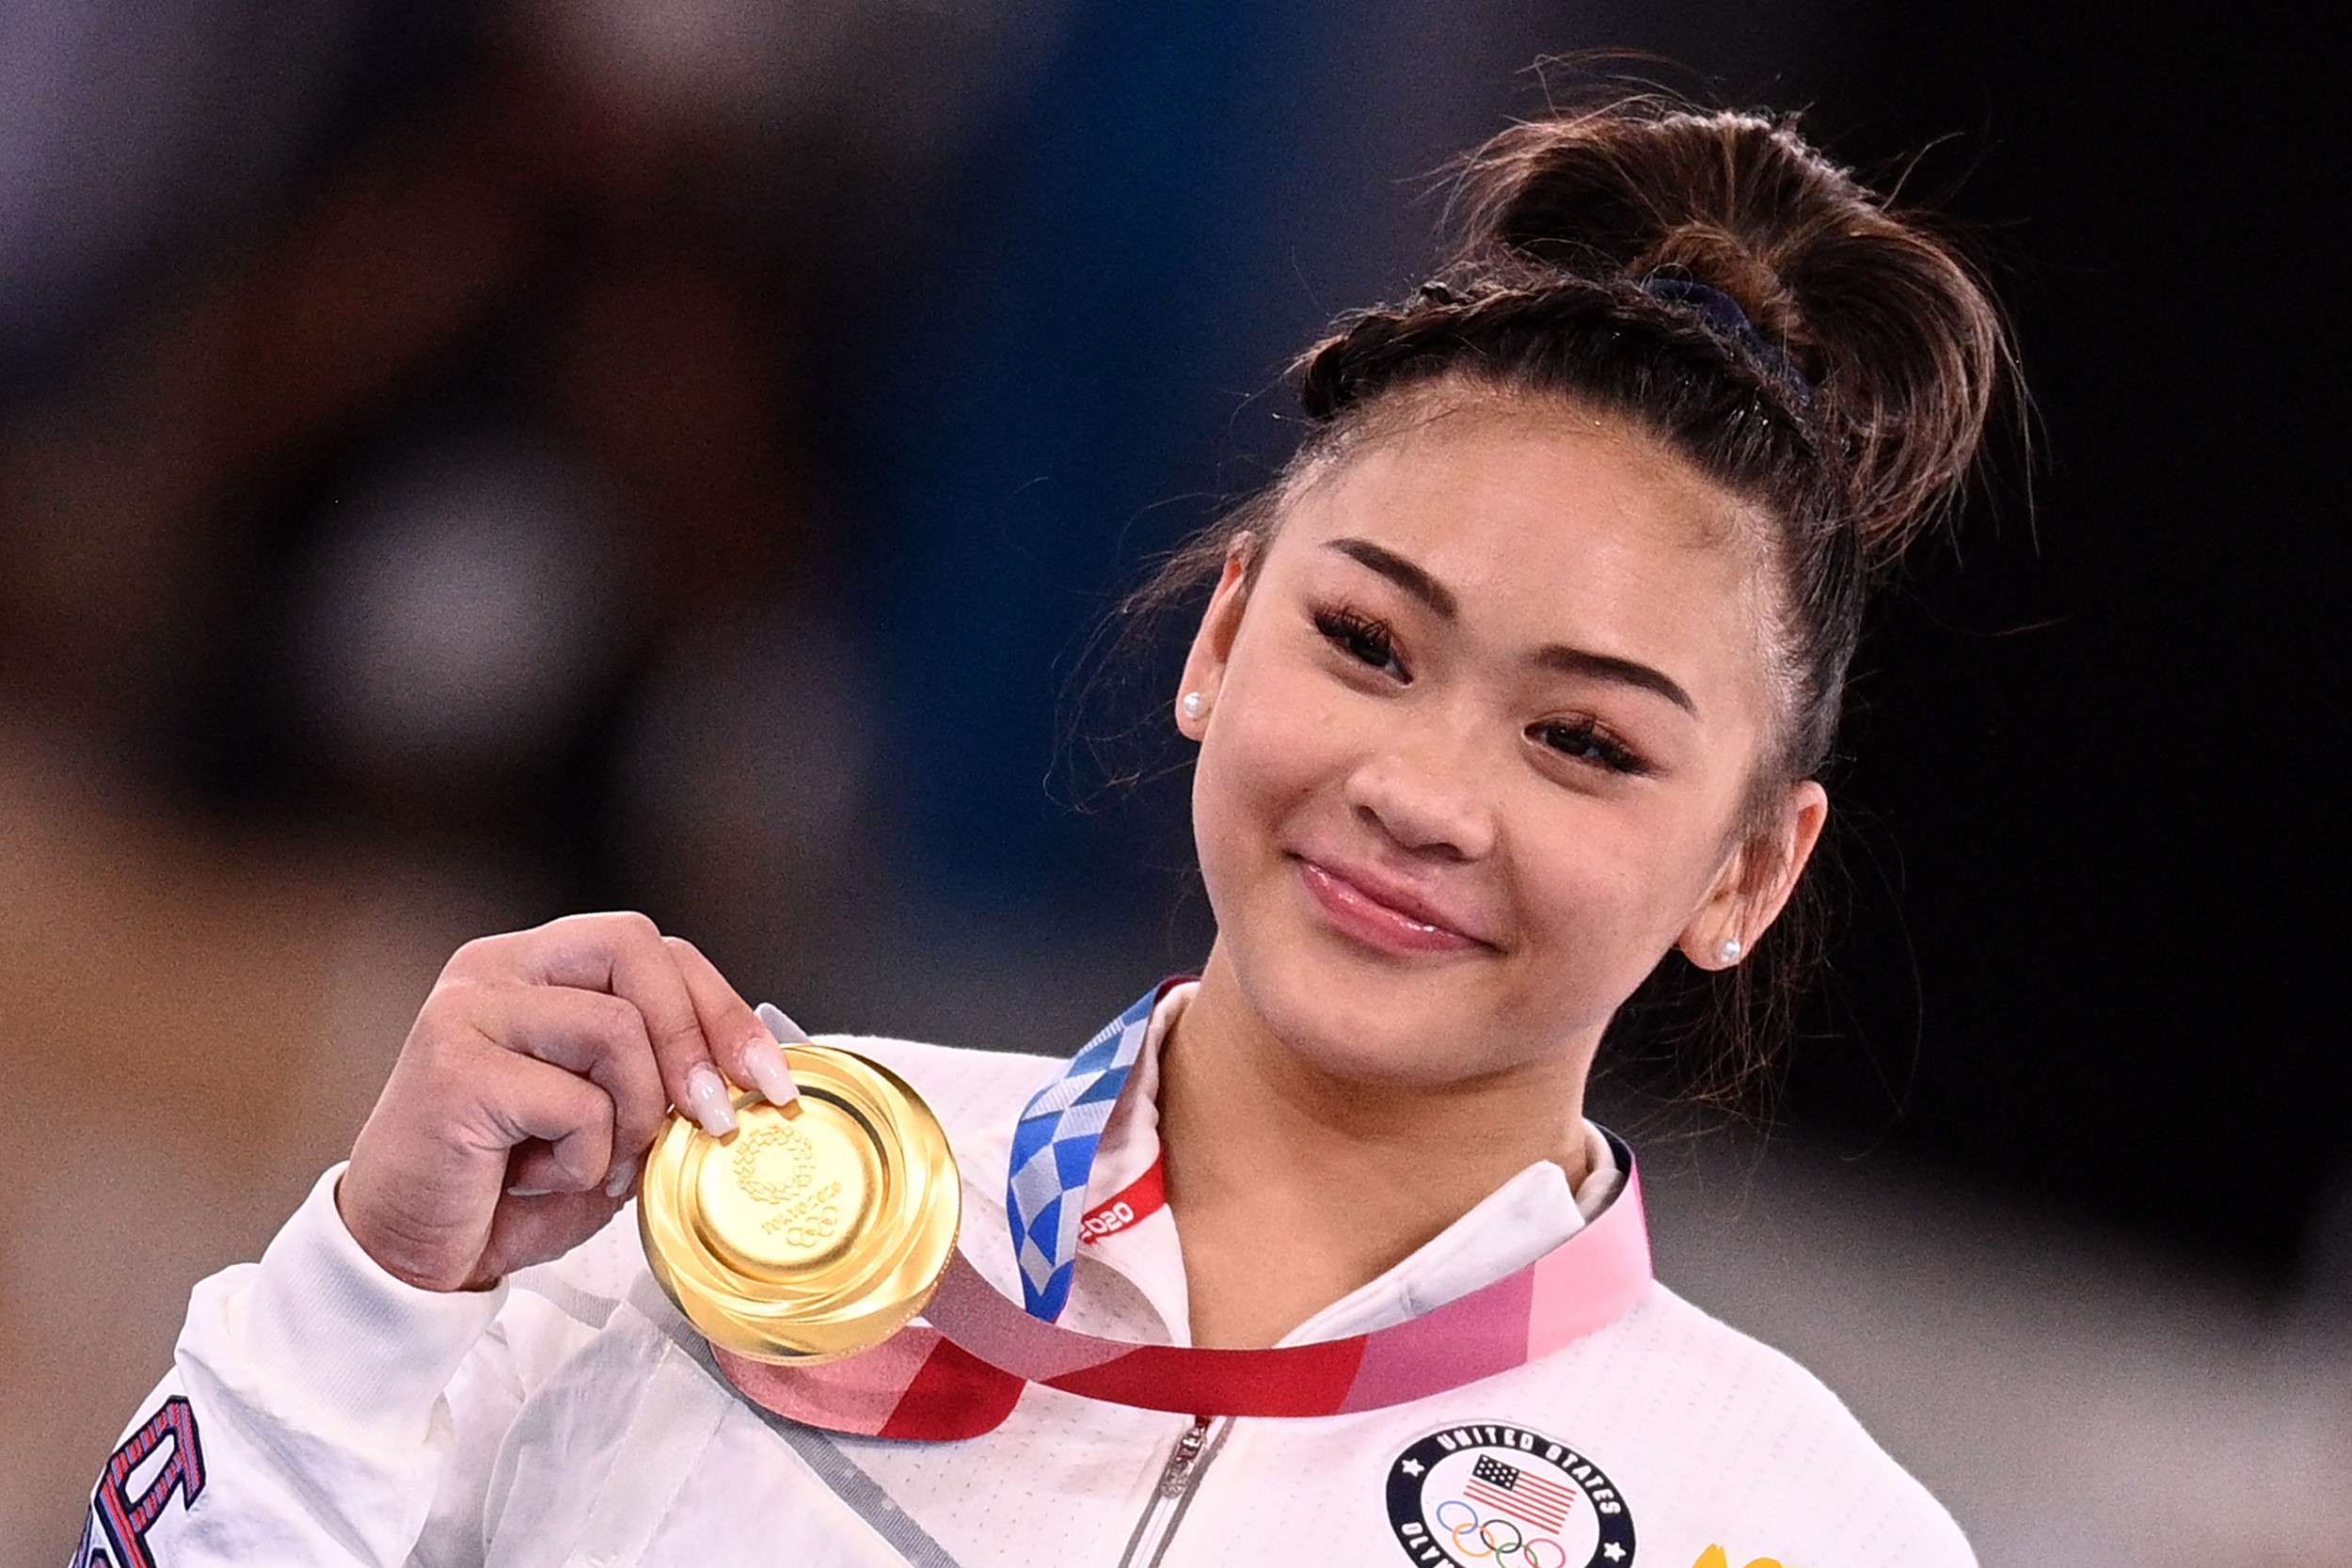 Tokyo 2020 Live Updates: U.S. Athlete Hints at Russian Doping, Suni Lee